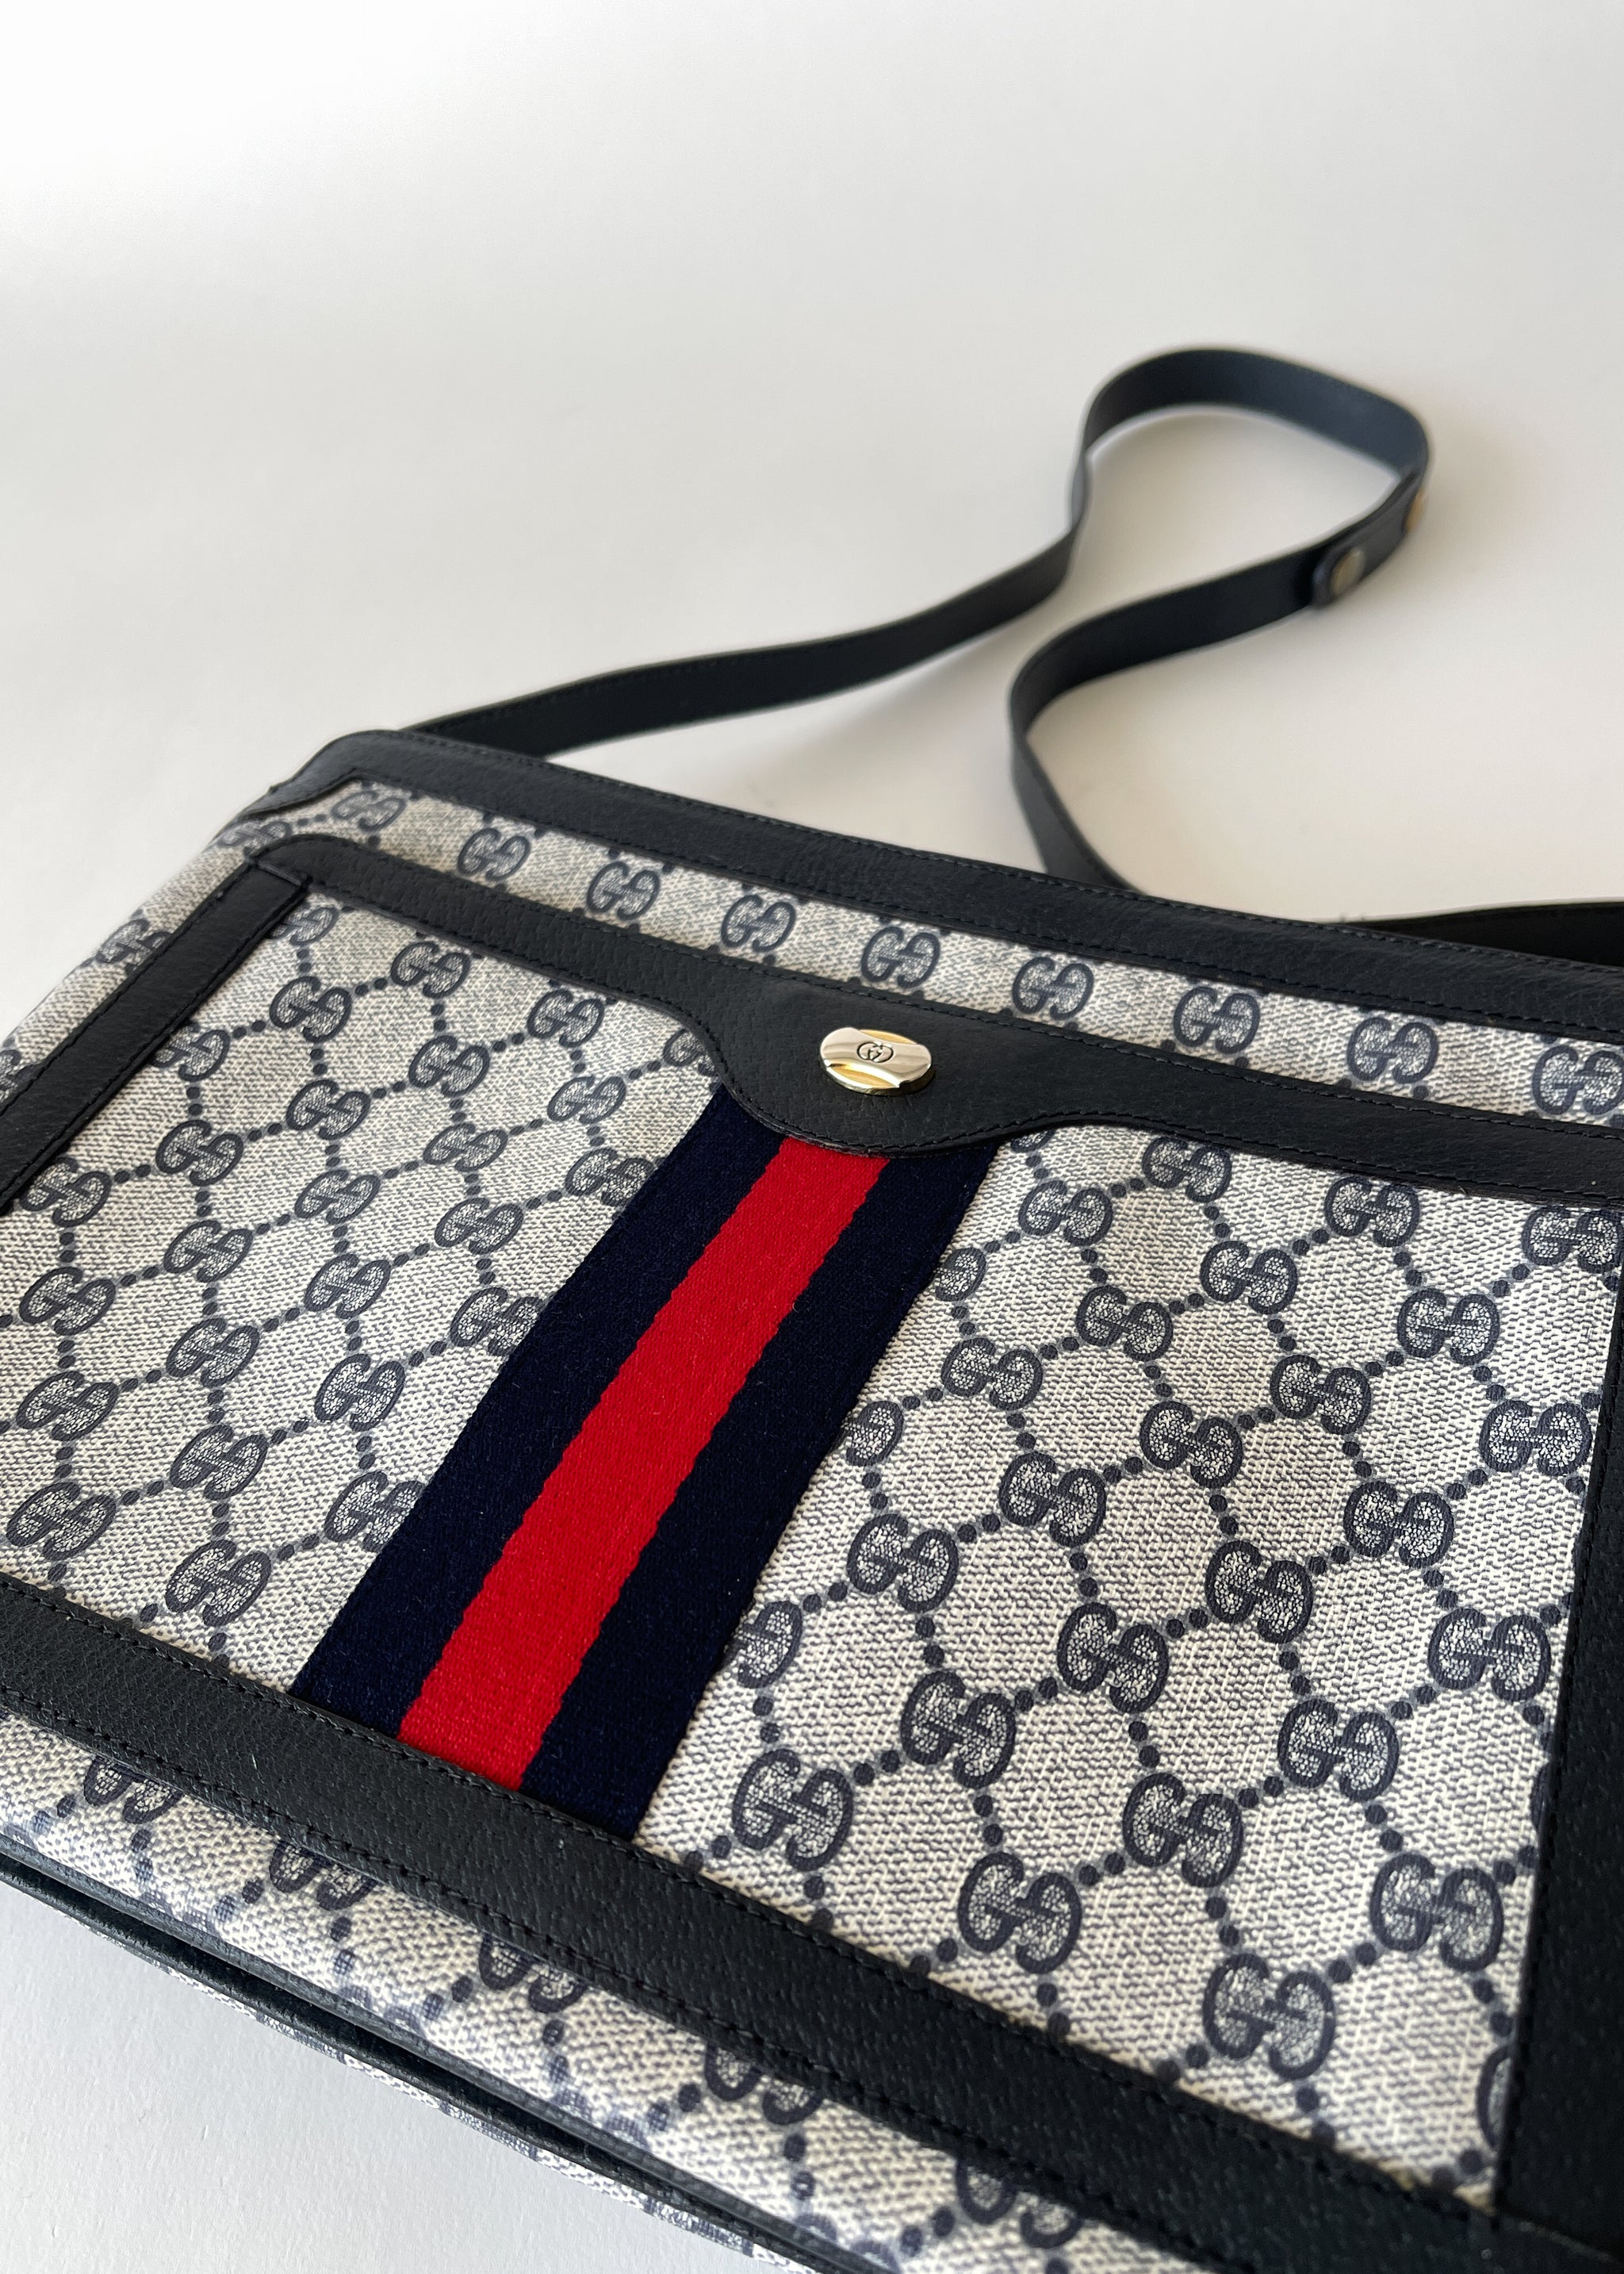 Handbag Women's Small Red Pleated Purse Handles Cord Fabric Vintage  8x5.5x2.5